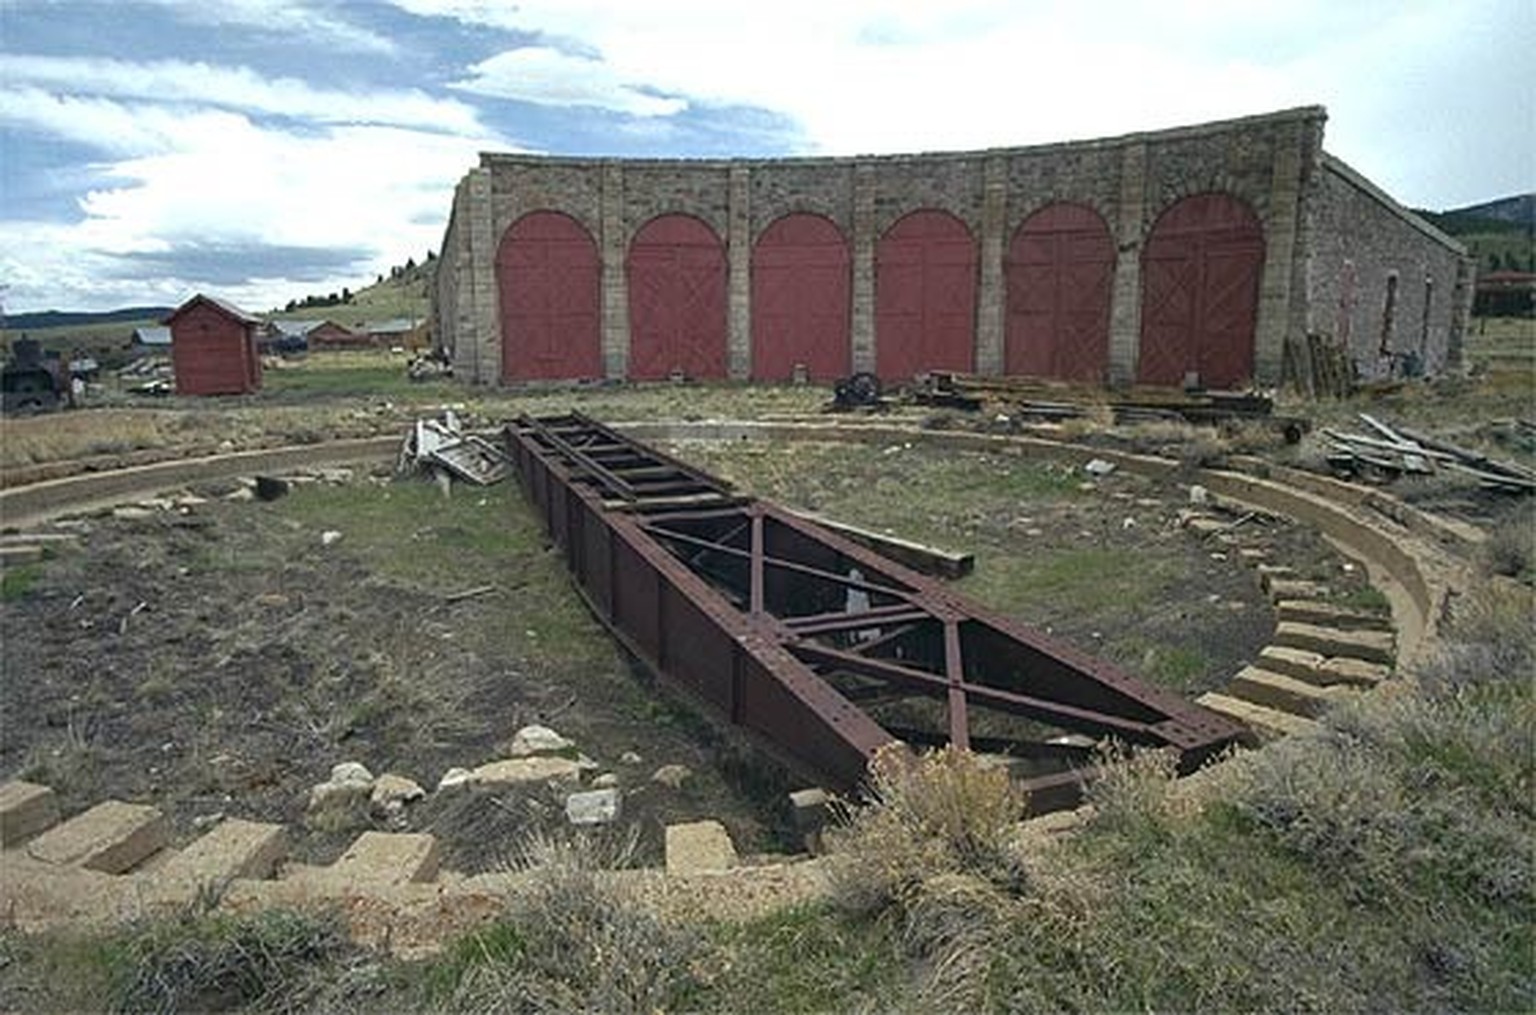 Como colorado railroad ghost town
Photo Daniel Ter-Nedden https://www.ghosttowngallery.com/